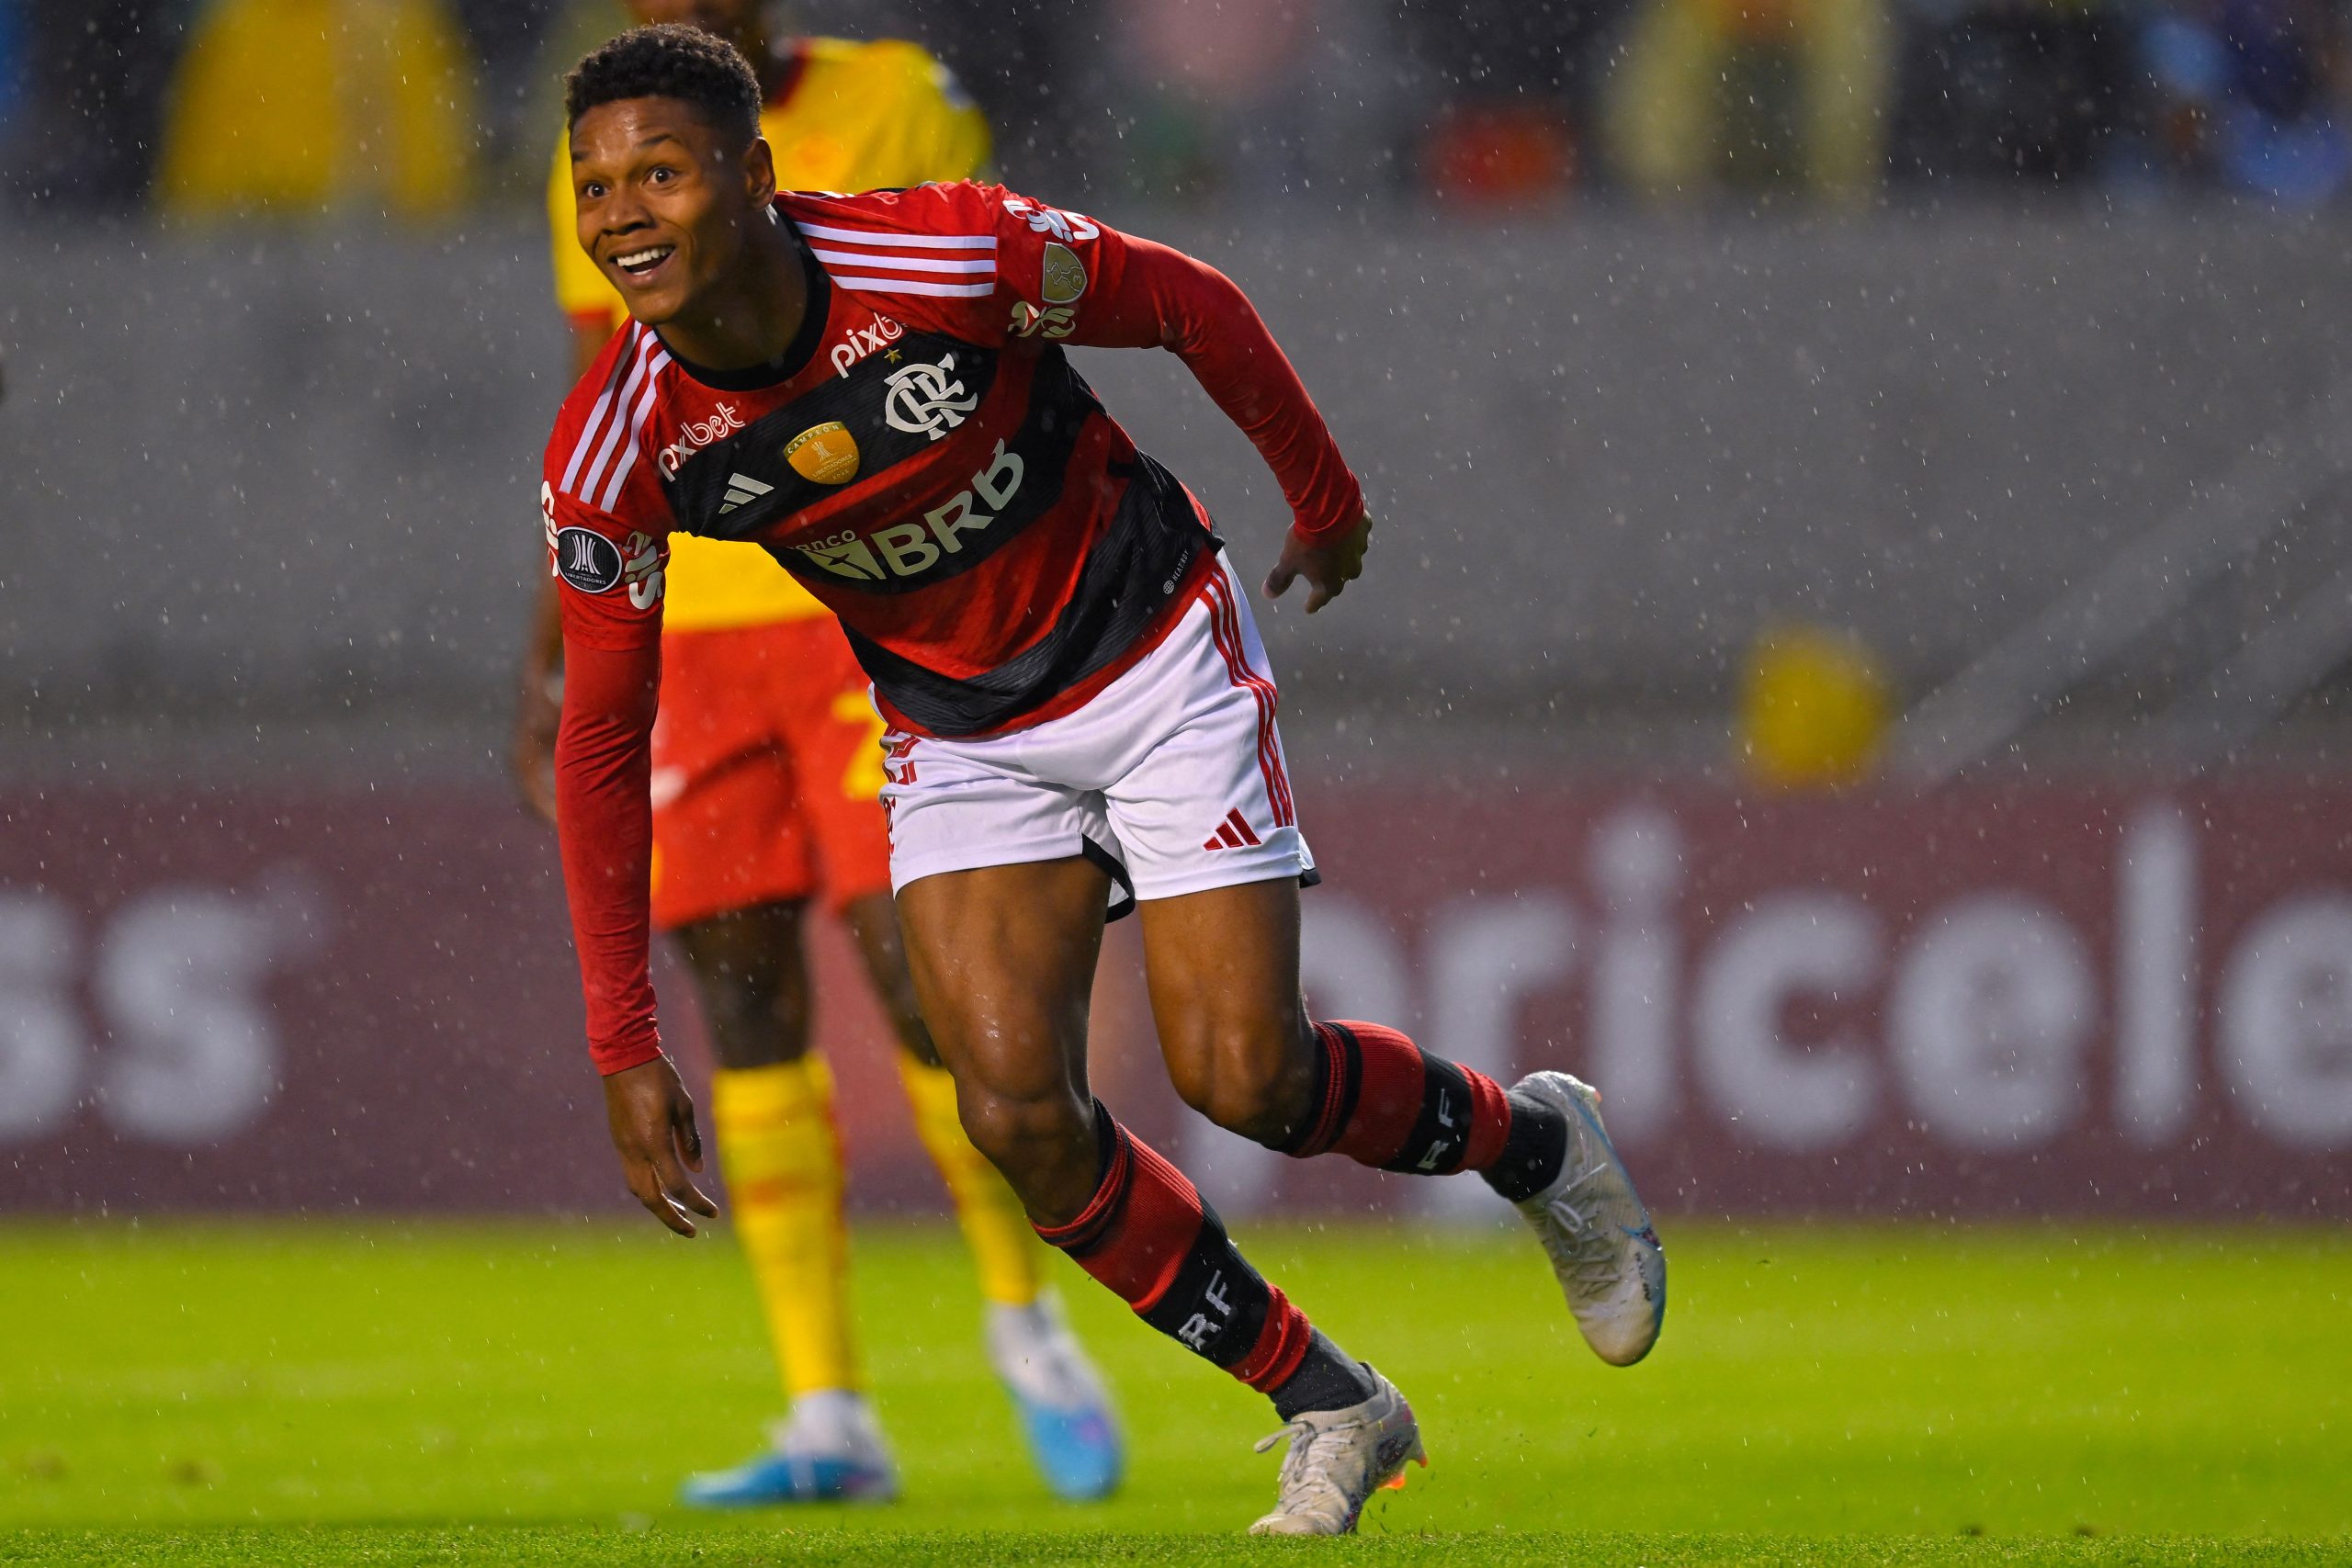 Flamengo's forward Matheus Franca celebrates after scoring a goal.